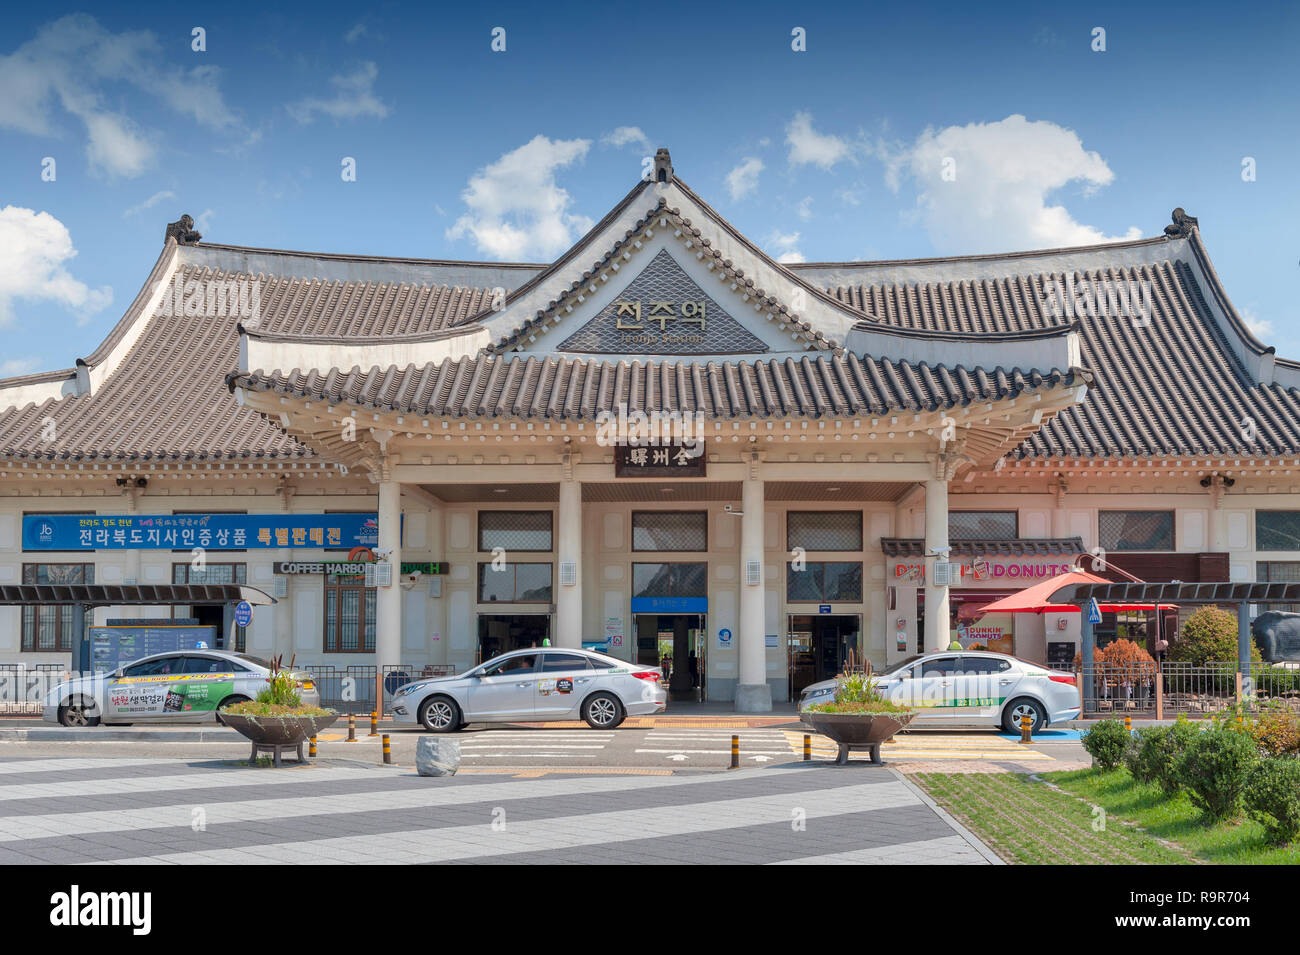 Facade of Jeonju Railway Station built in traditional Korean architecture located in Deokjin-gu, Jeonju, South Korea Stock Photo